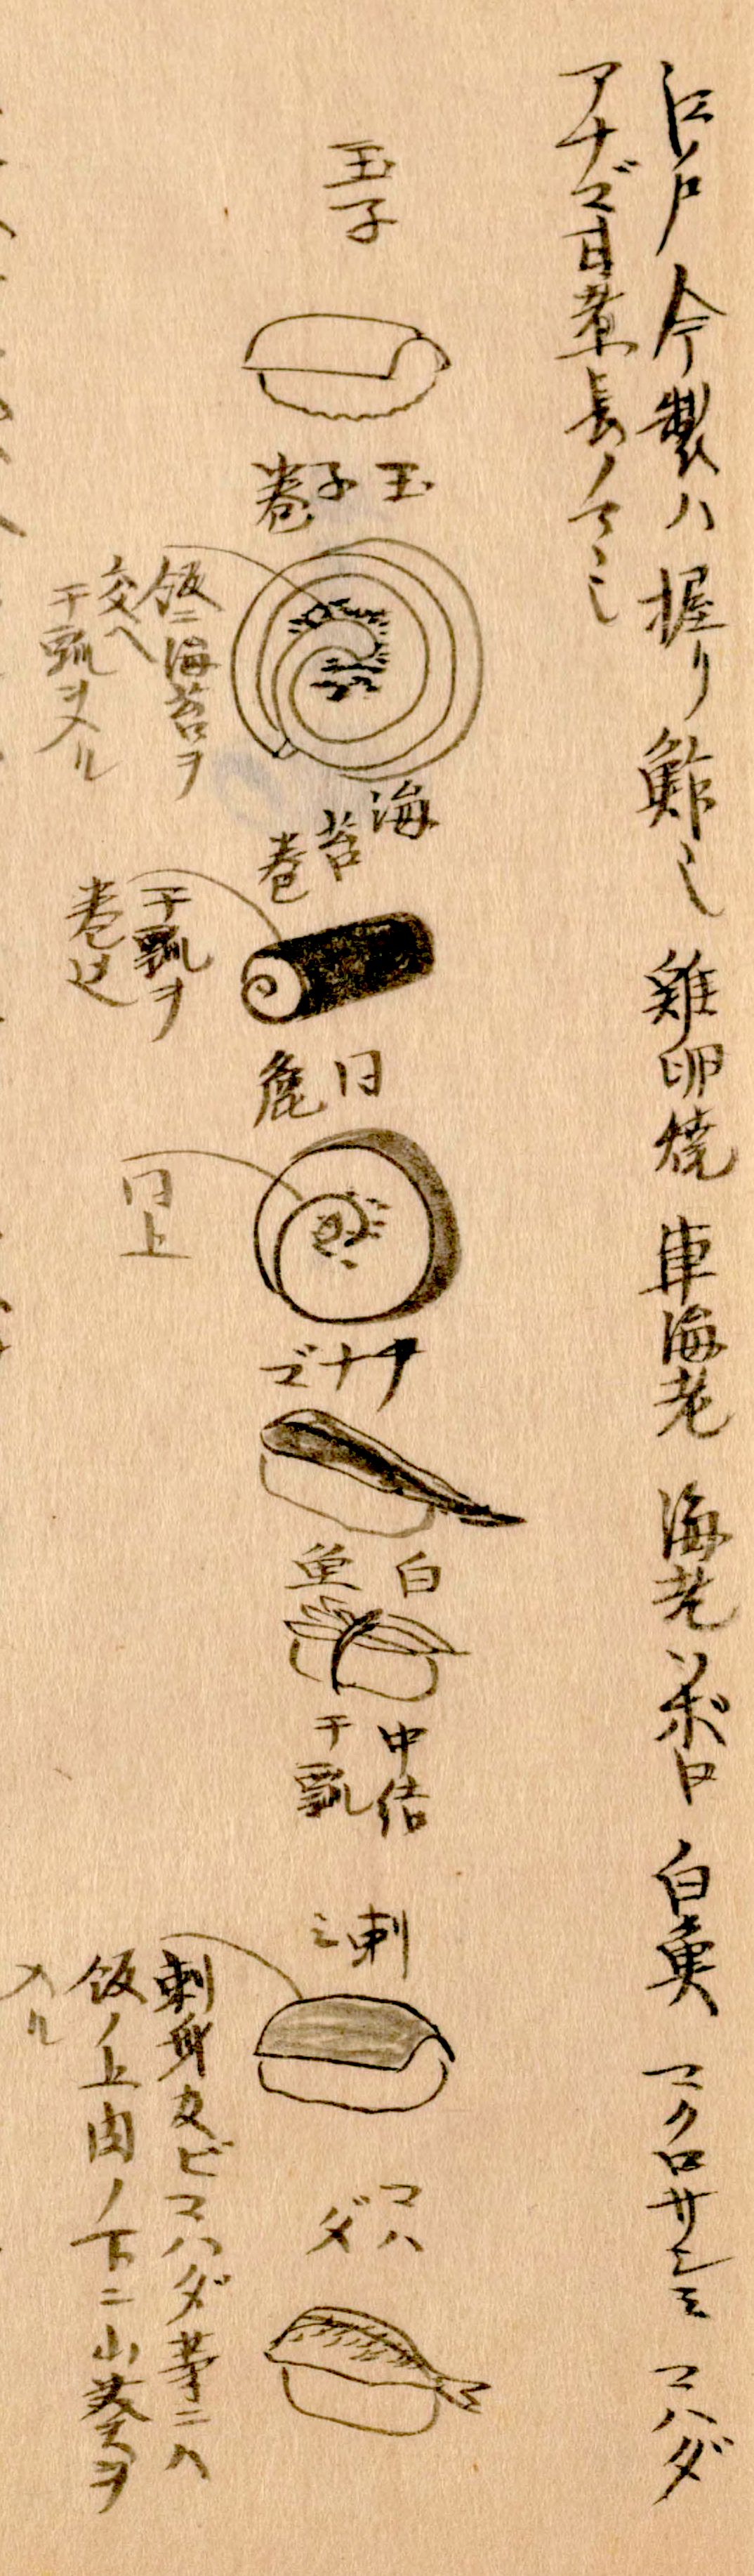 Nigirizushi from Morisada’s Sketches. From top: tamagoyaki (rolled omelet), tamagomaki (kanpyō gourd strips wrapped in tamagoyaki), norimaki with kanpyō inside, a norimaki cross-section, anago (conger eel), shirauo (icefish) wrapped with kanpyō, tuna sashimi, and kohada (gizzard shad). (Courtesy National Diet Library)